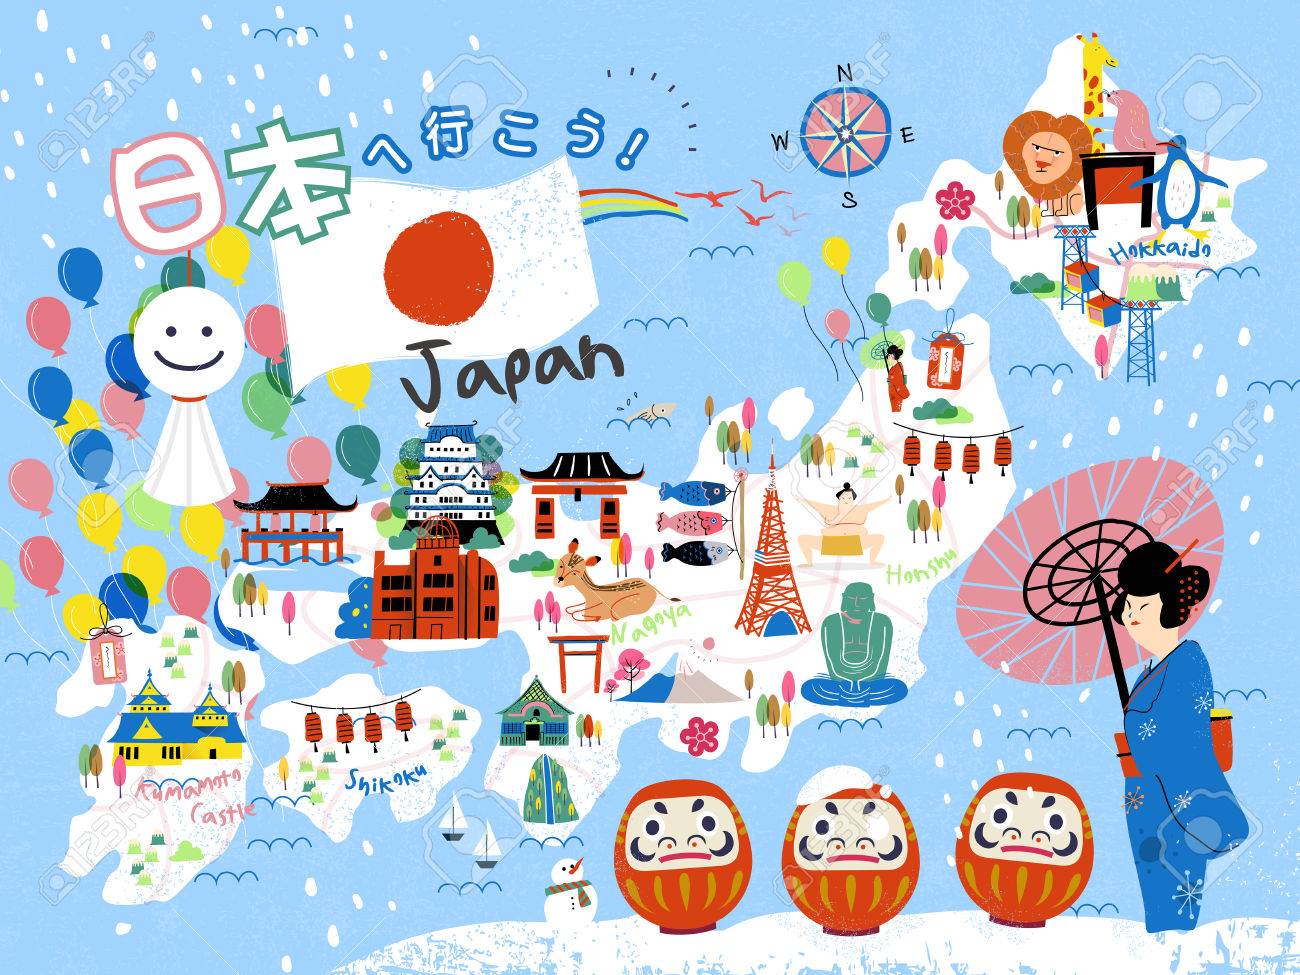 54693090-colorful-japan-travel-map-let-s-go-to-japan-in-japanese-on-upper-left.jpg